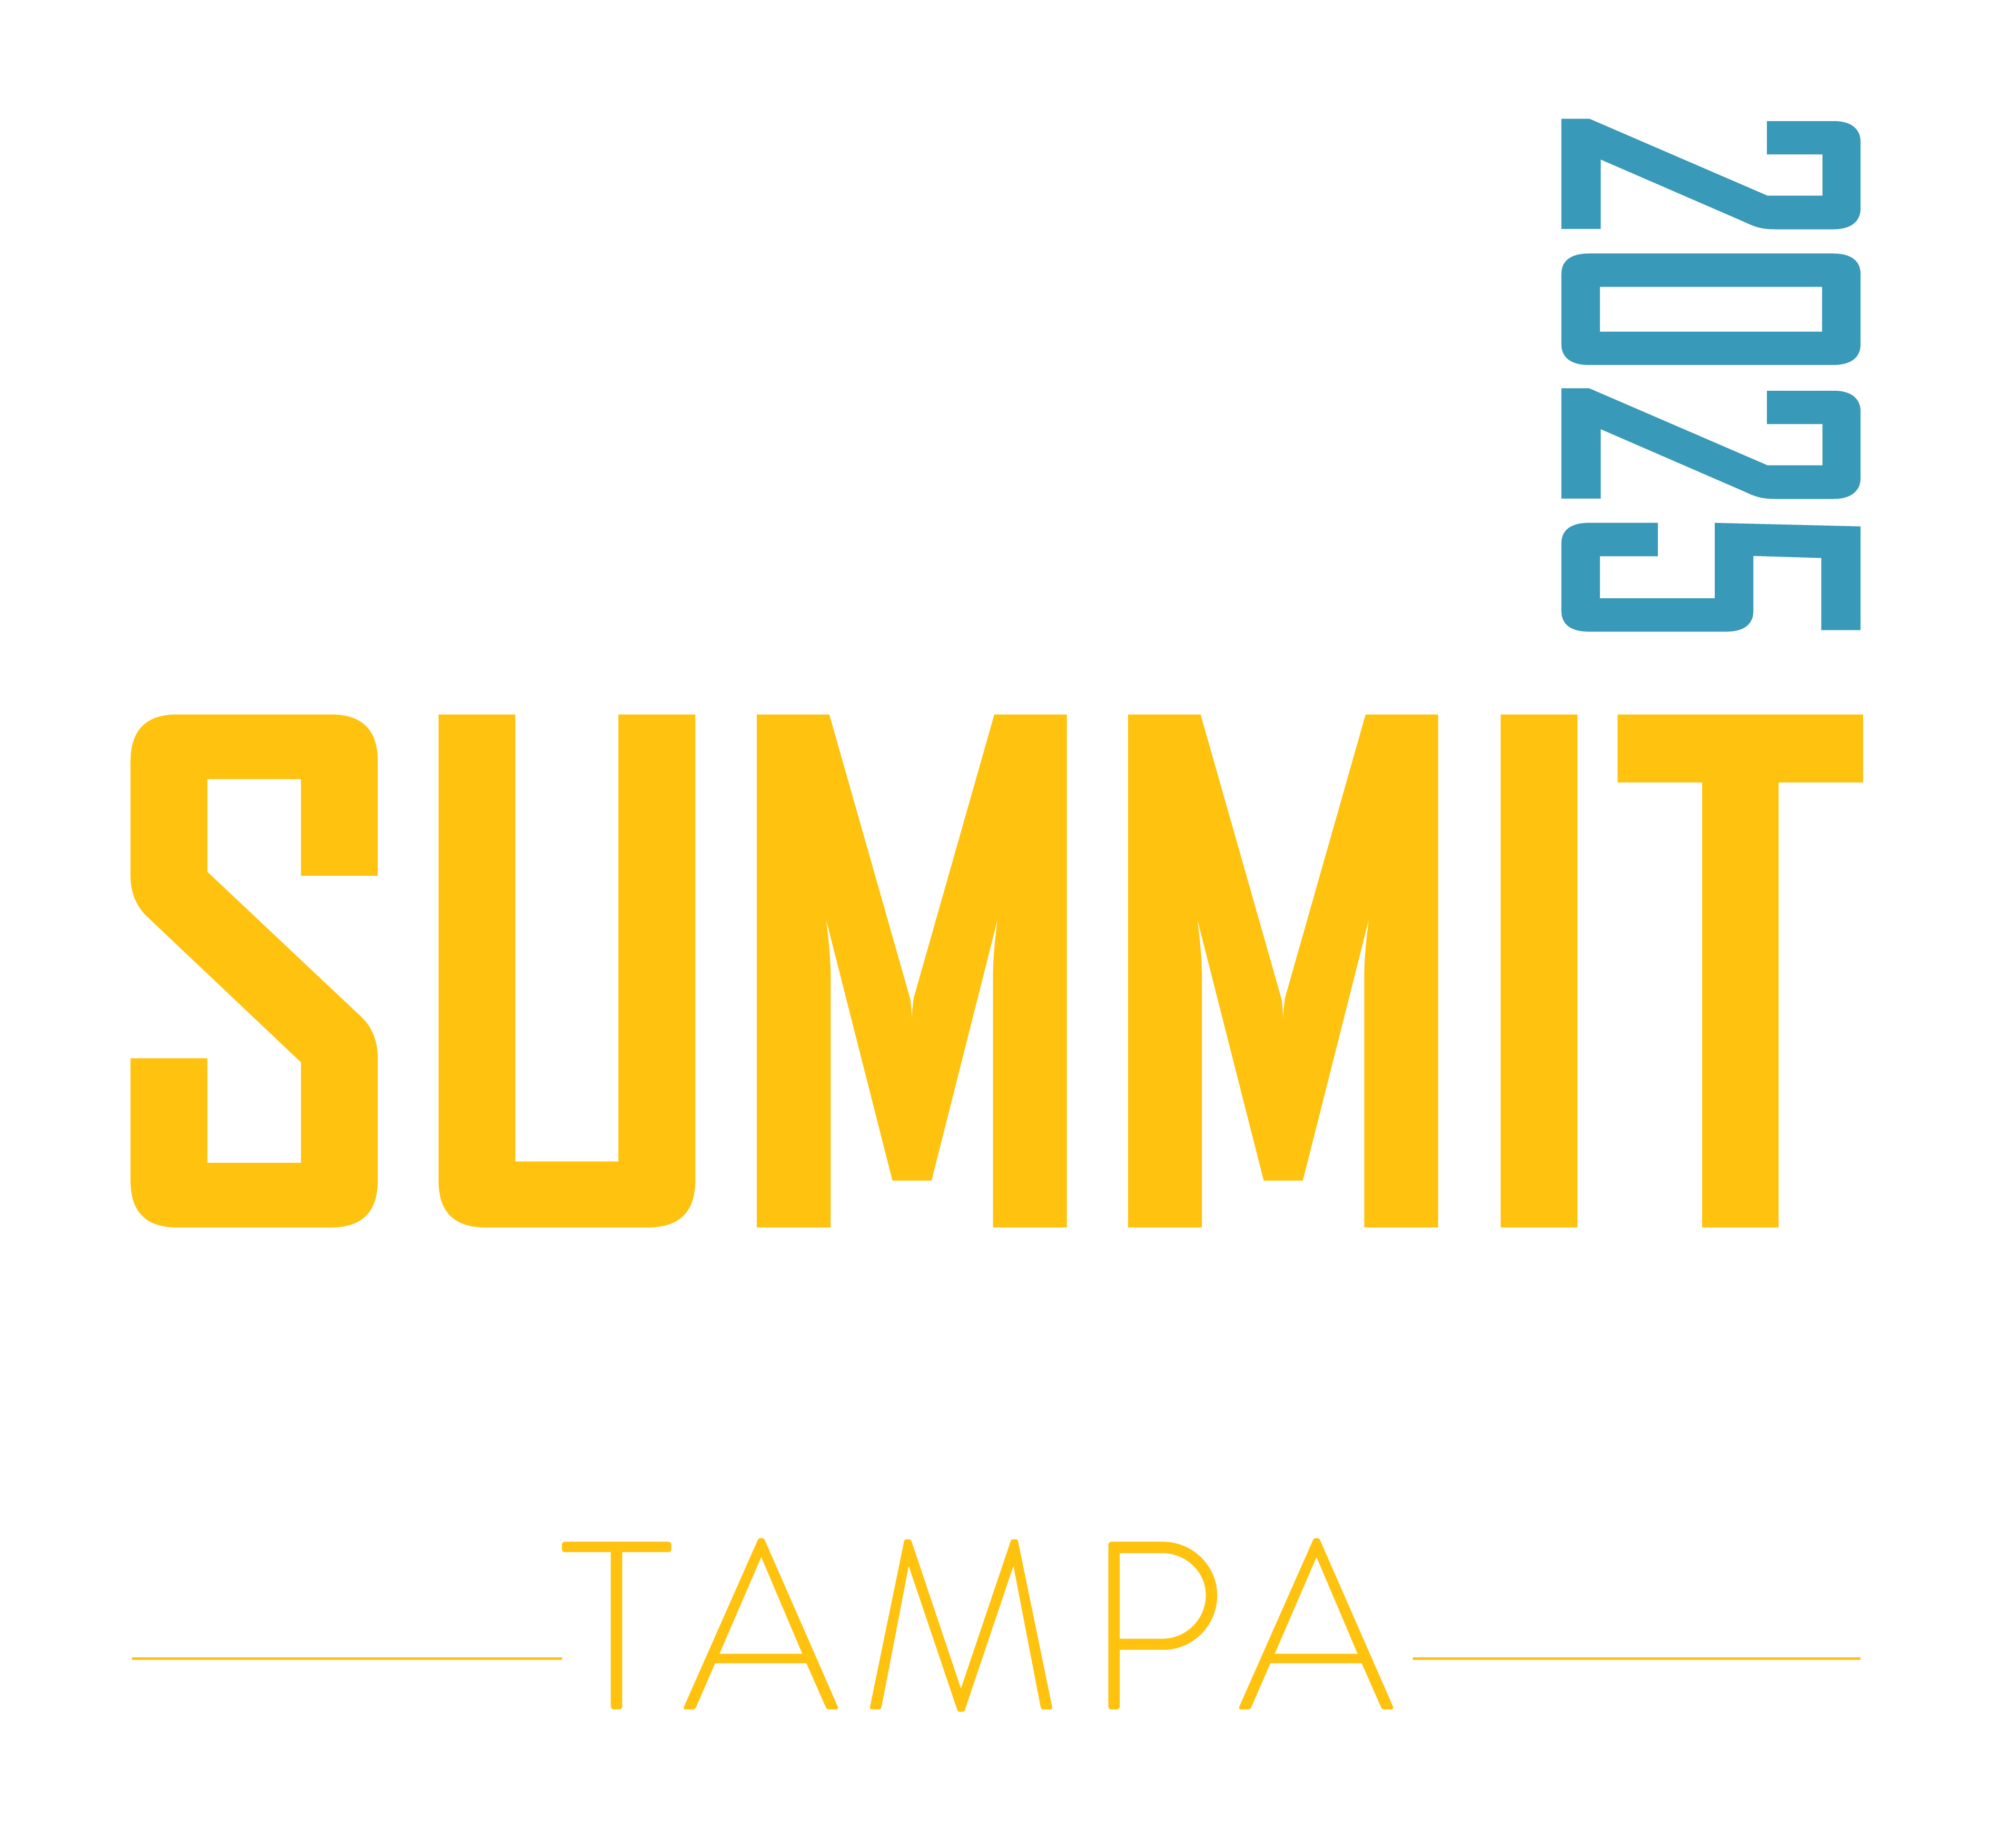 Spine Summit 2025 - Tampa, Florida